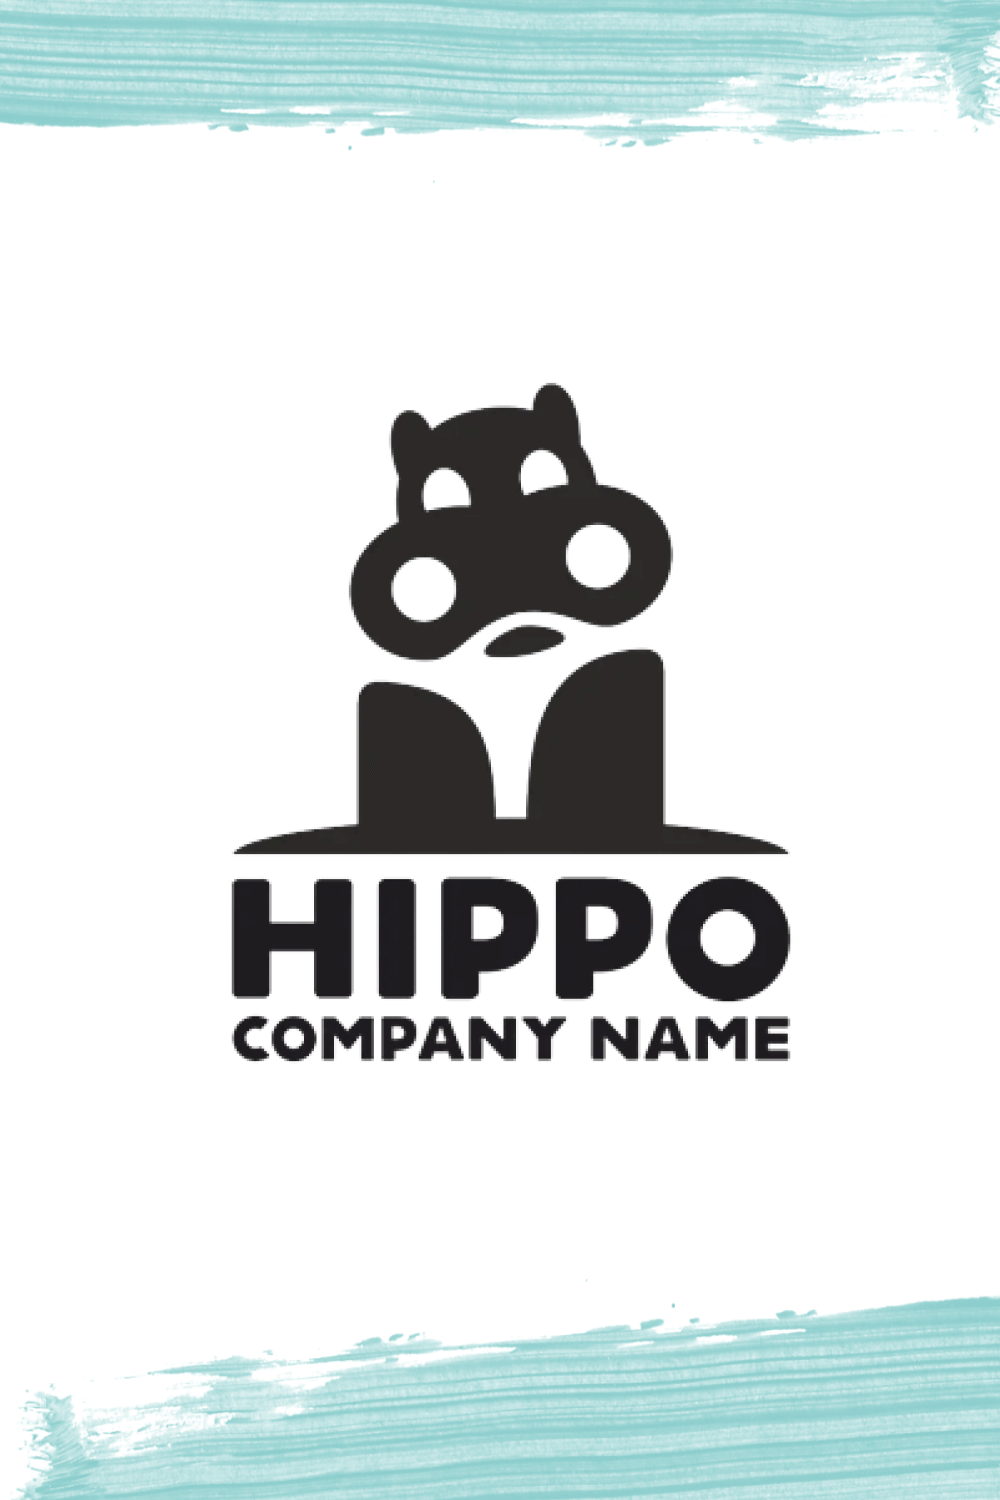 Little Hippo purpule.